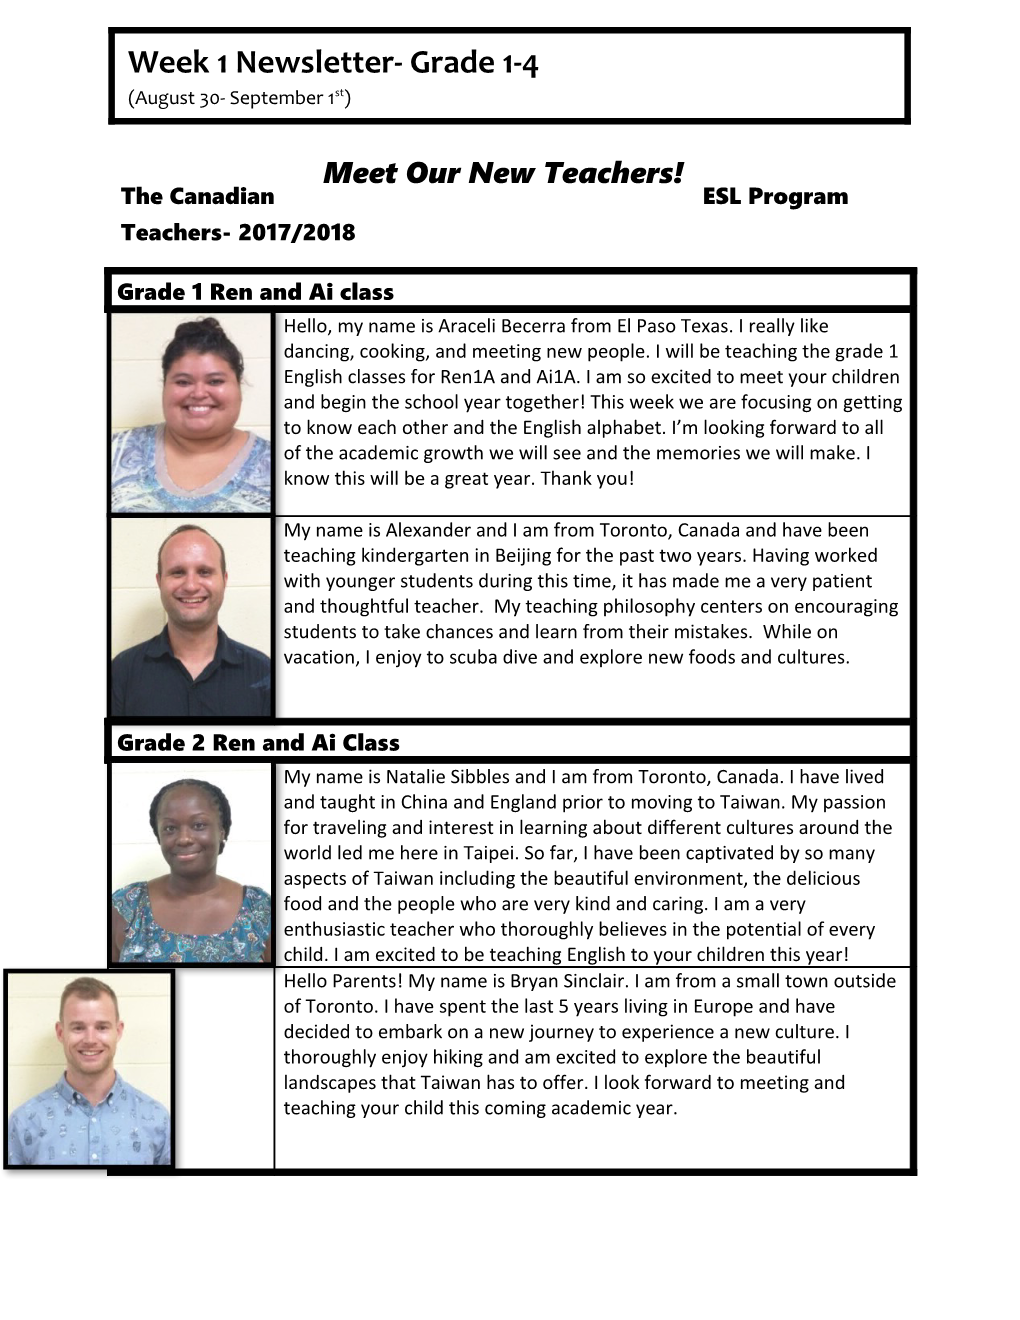 The Canadian ESL Program Teachers- 2017/2018